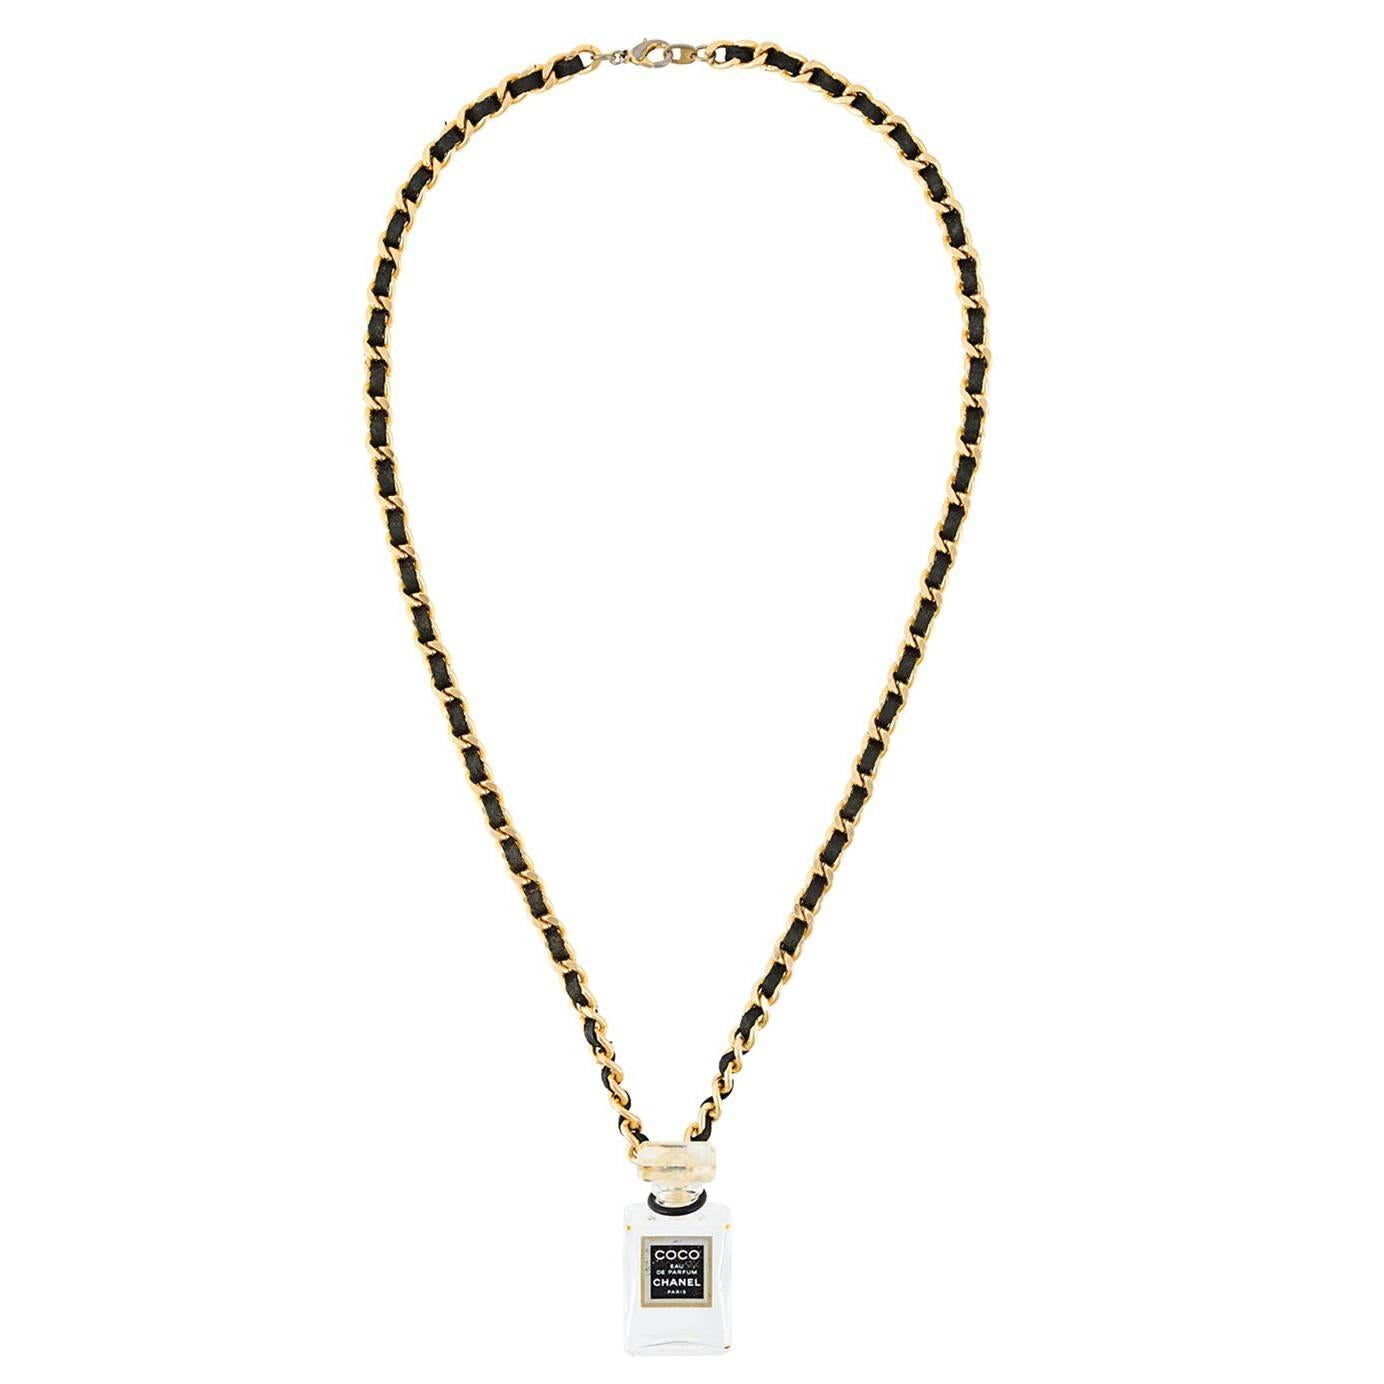 Chanel Perfume Pendant Necklace